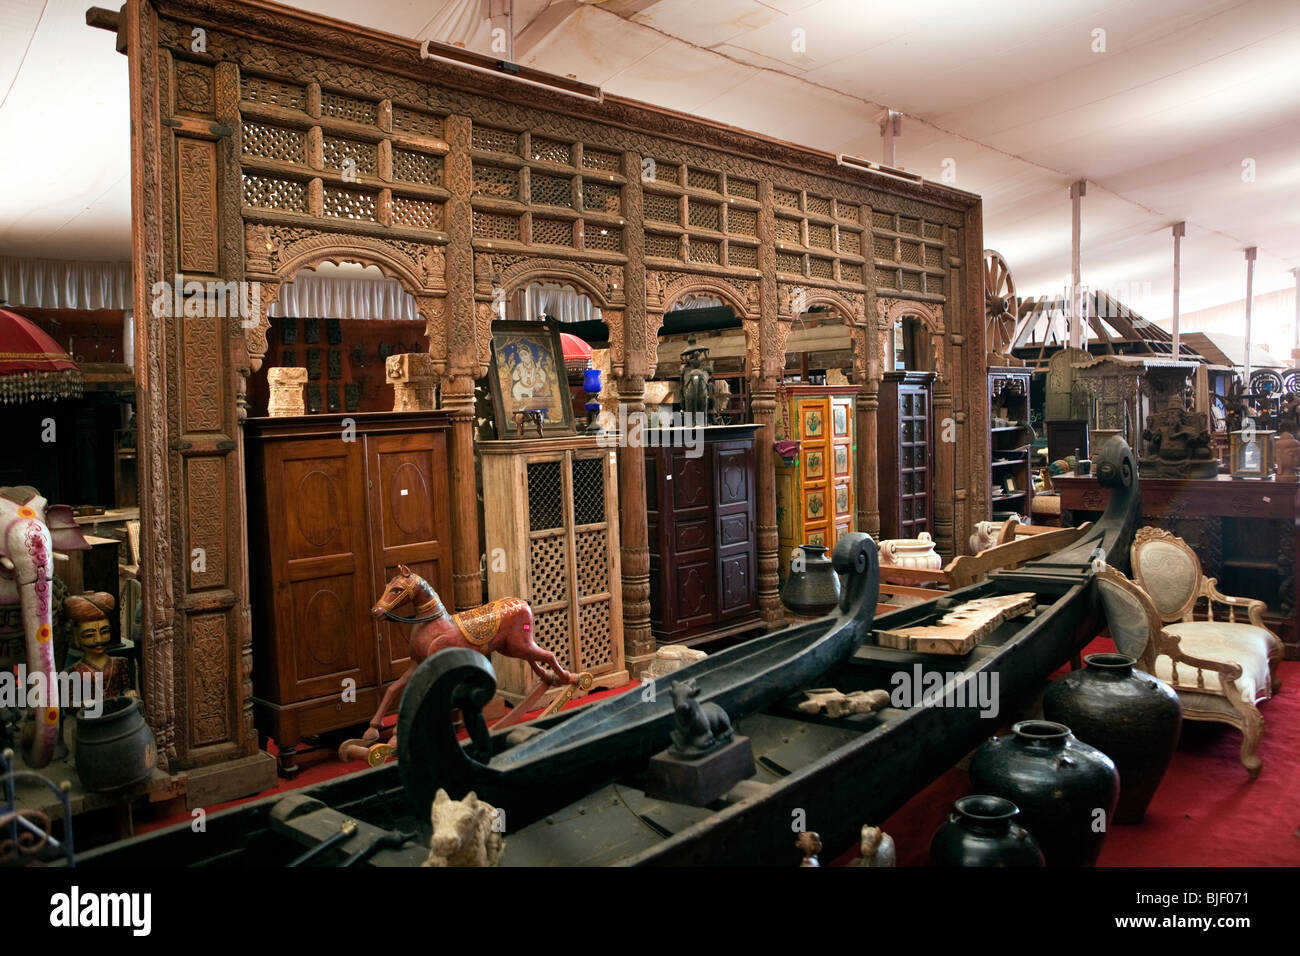 India, Kerala, Kochi, Mattancherry, Jewtown, architectural antiques displayed in large shop Stock Photo